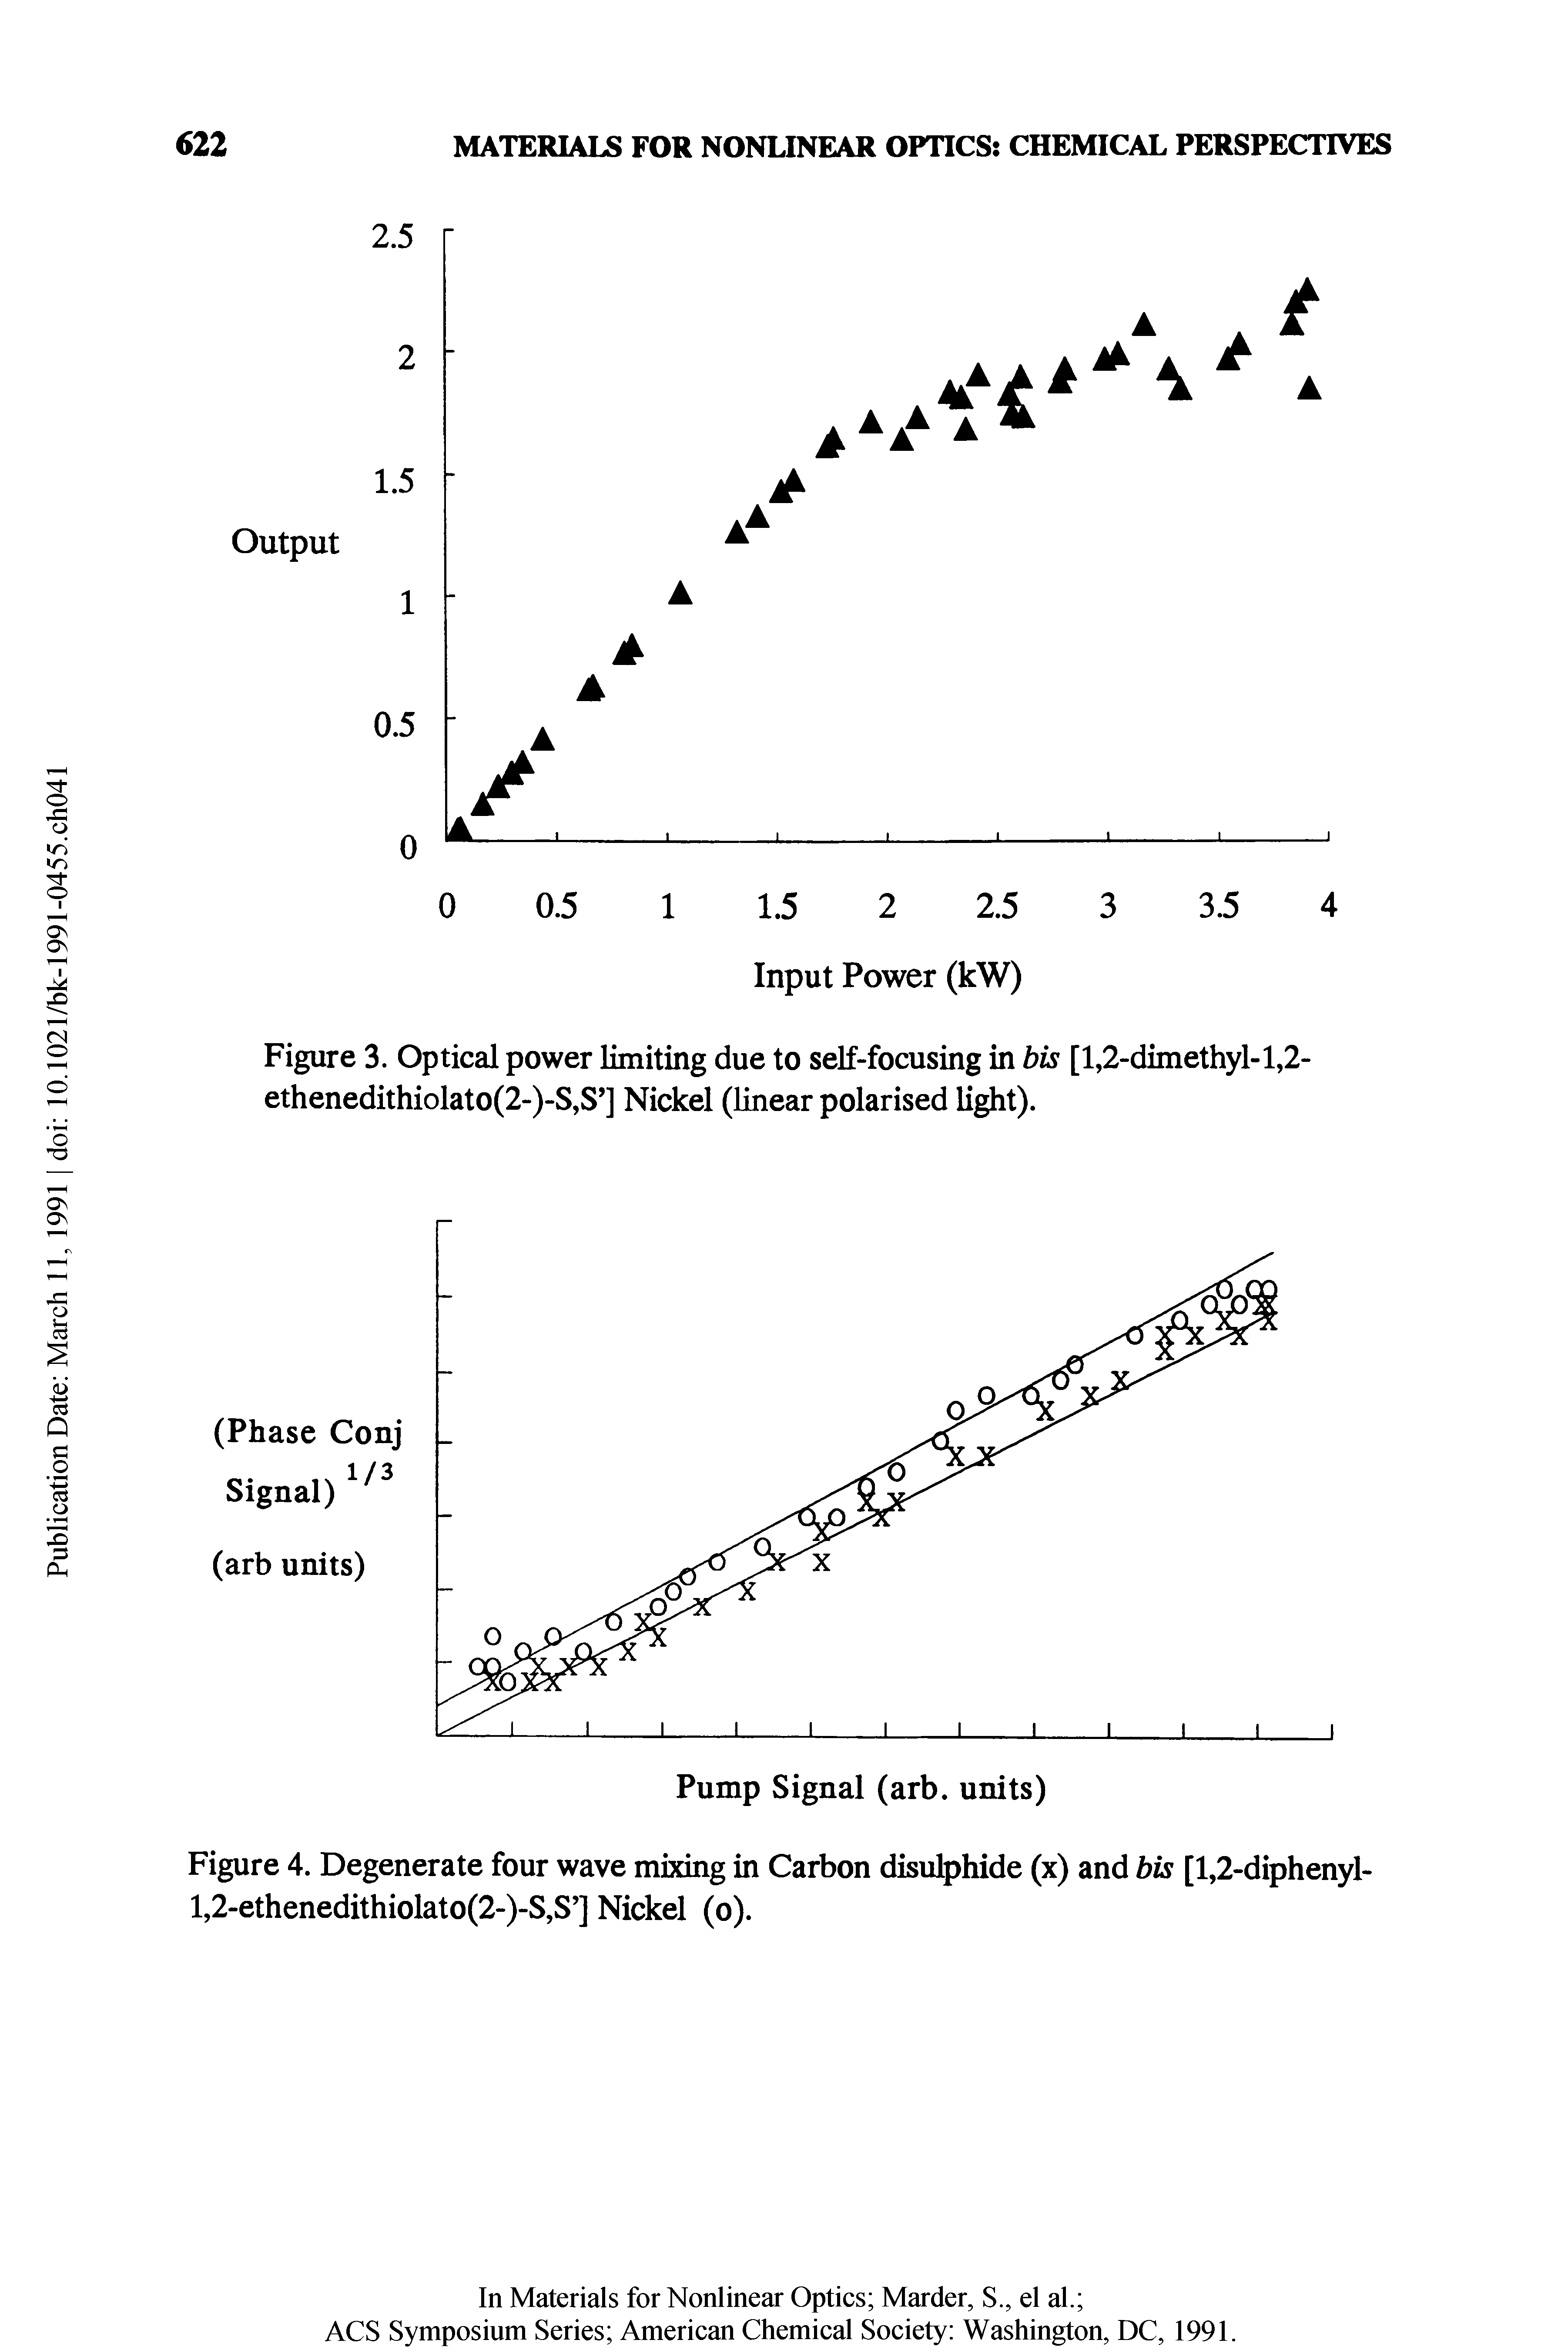 Figure 3. Optical power limiting due to self-focusing in bis [1,2-dimethyl-1,2-ethenedithiolato(2-)-S,S ] Nickel (linear polarised light).